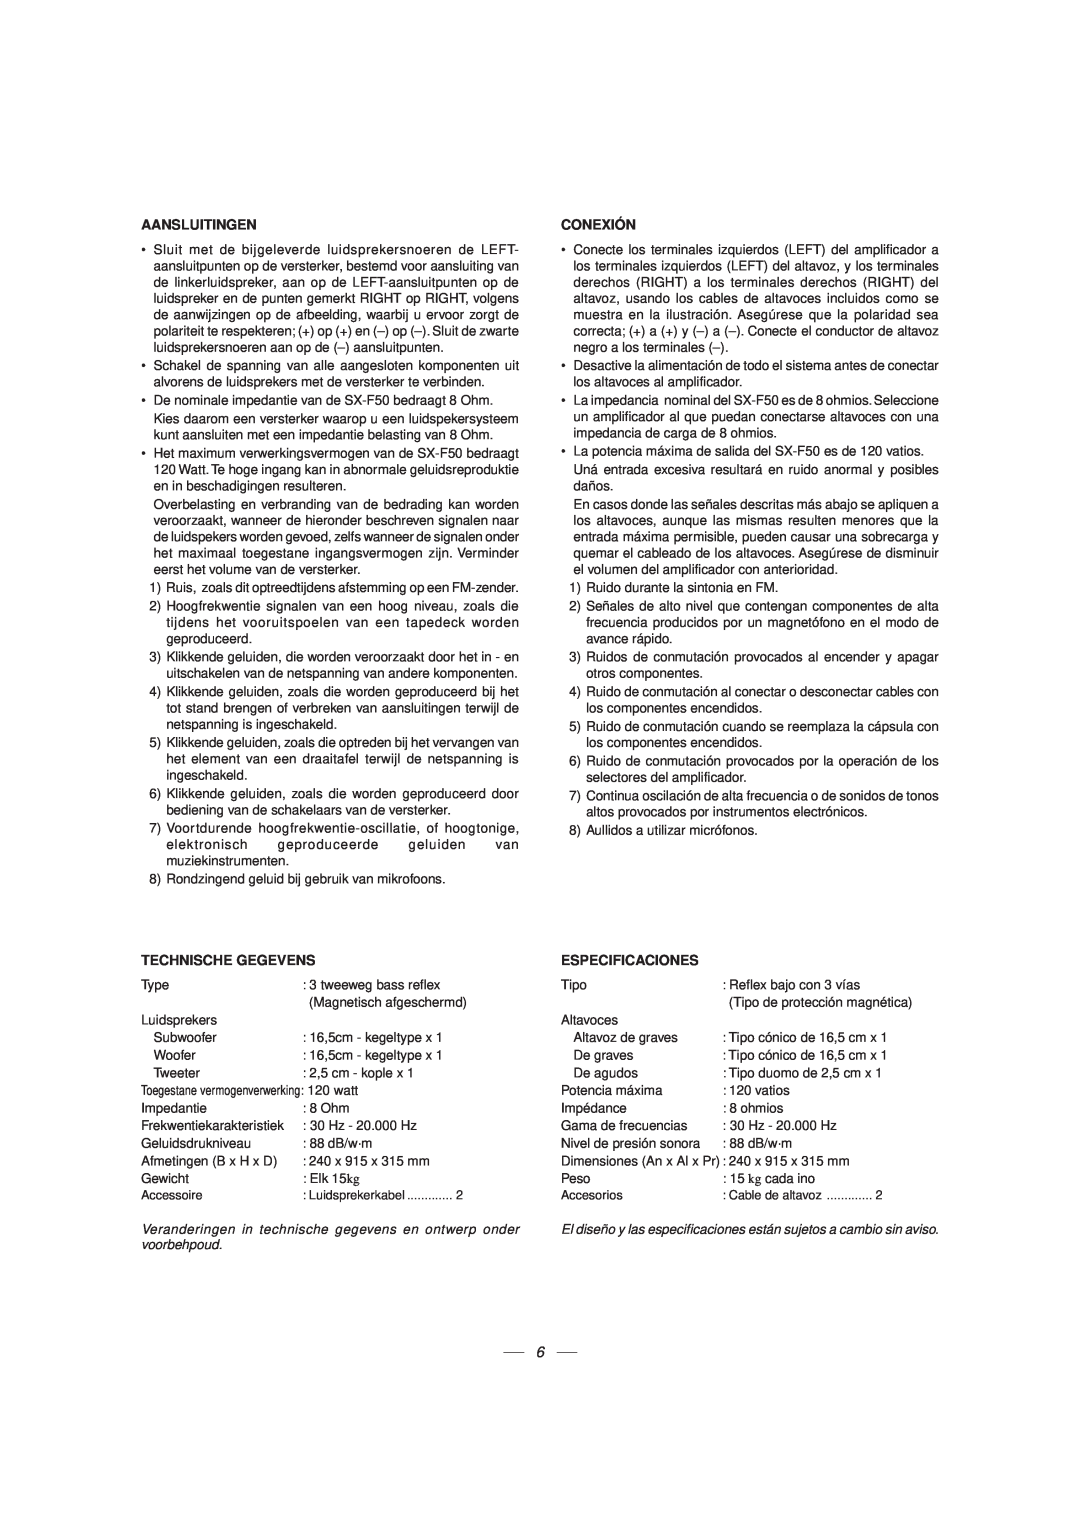 JVC LVT0347-001A, SX-F50 manual Aansluitingen, Conexión, Technische Gegevens, Especificaciones 